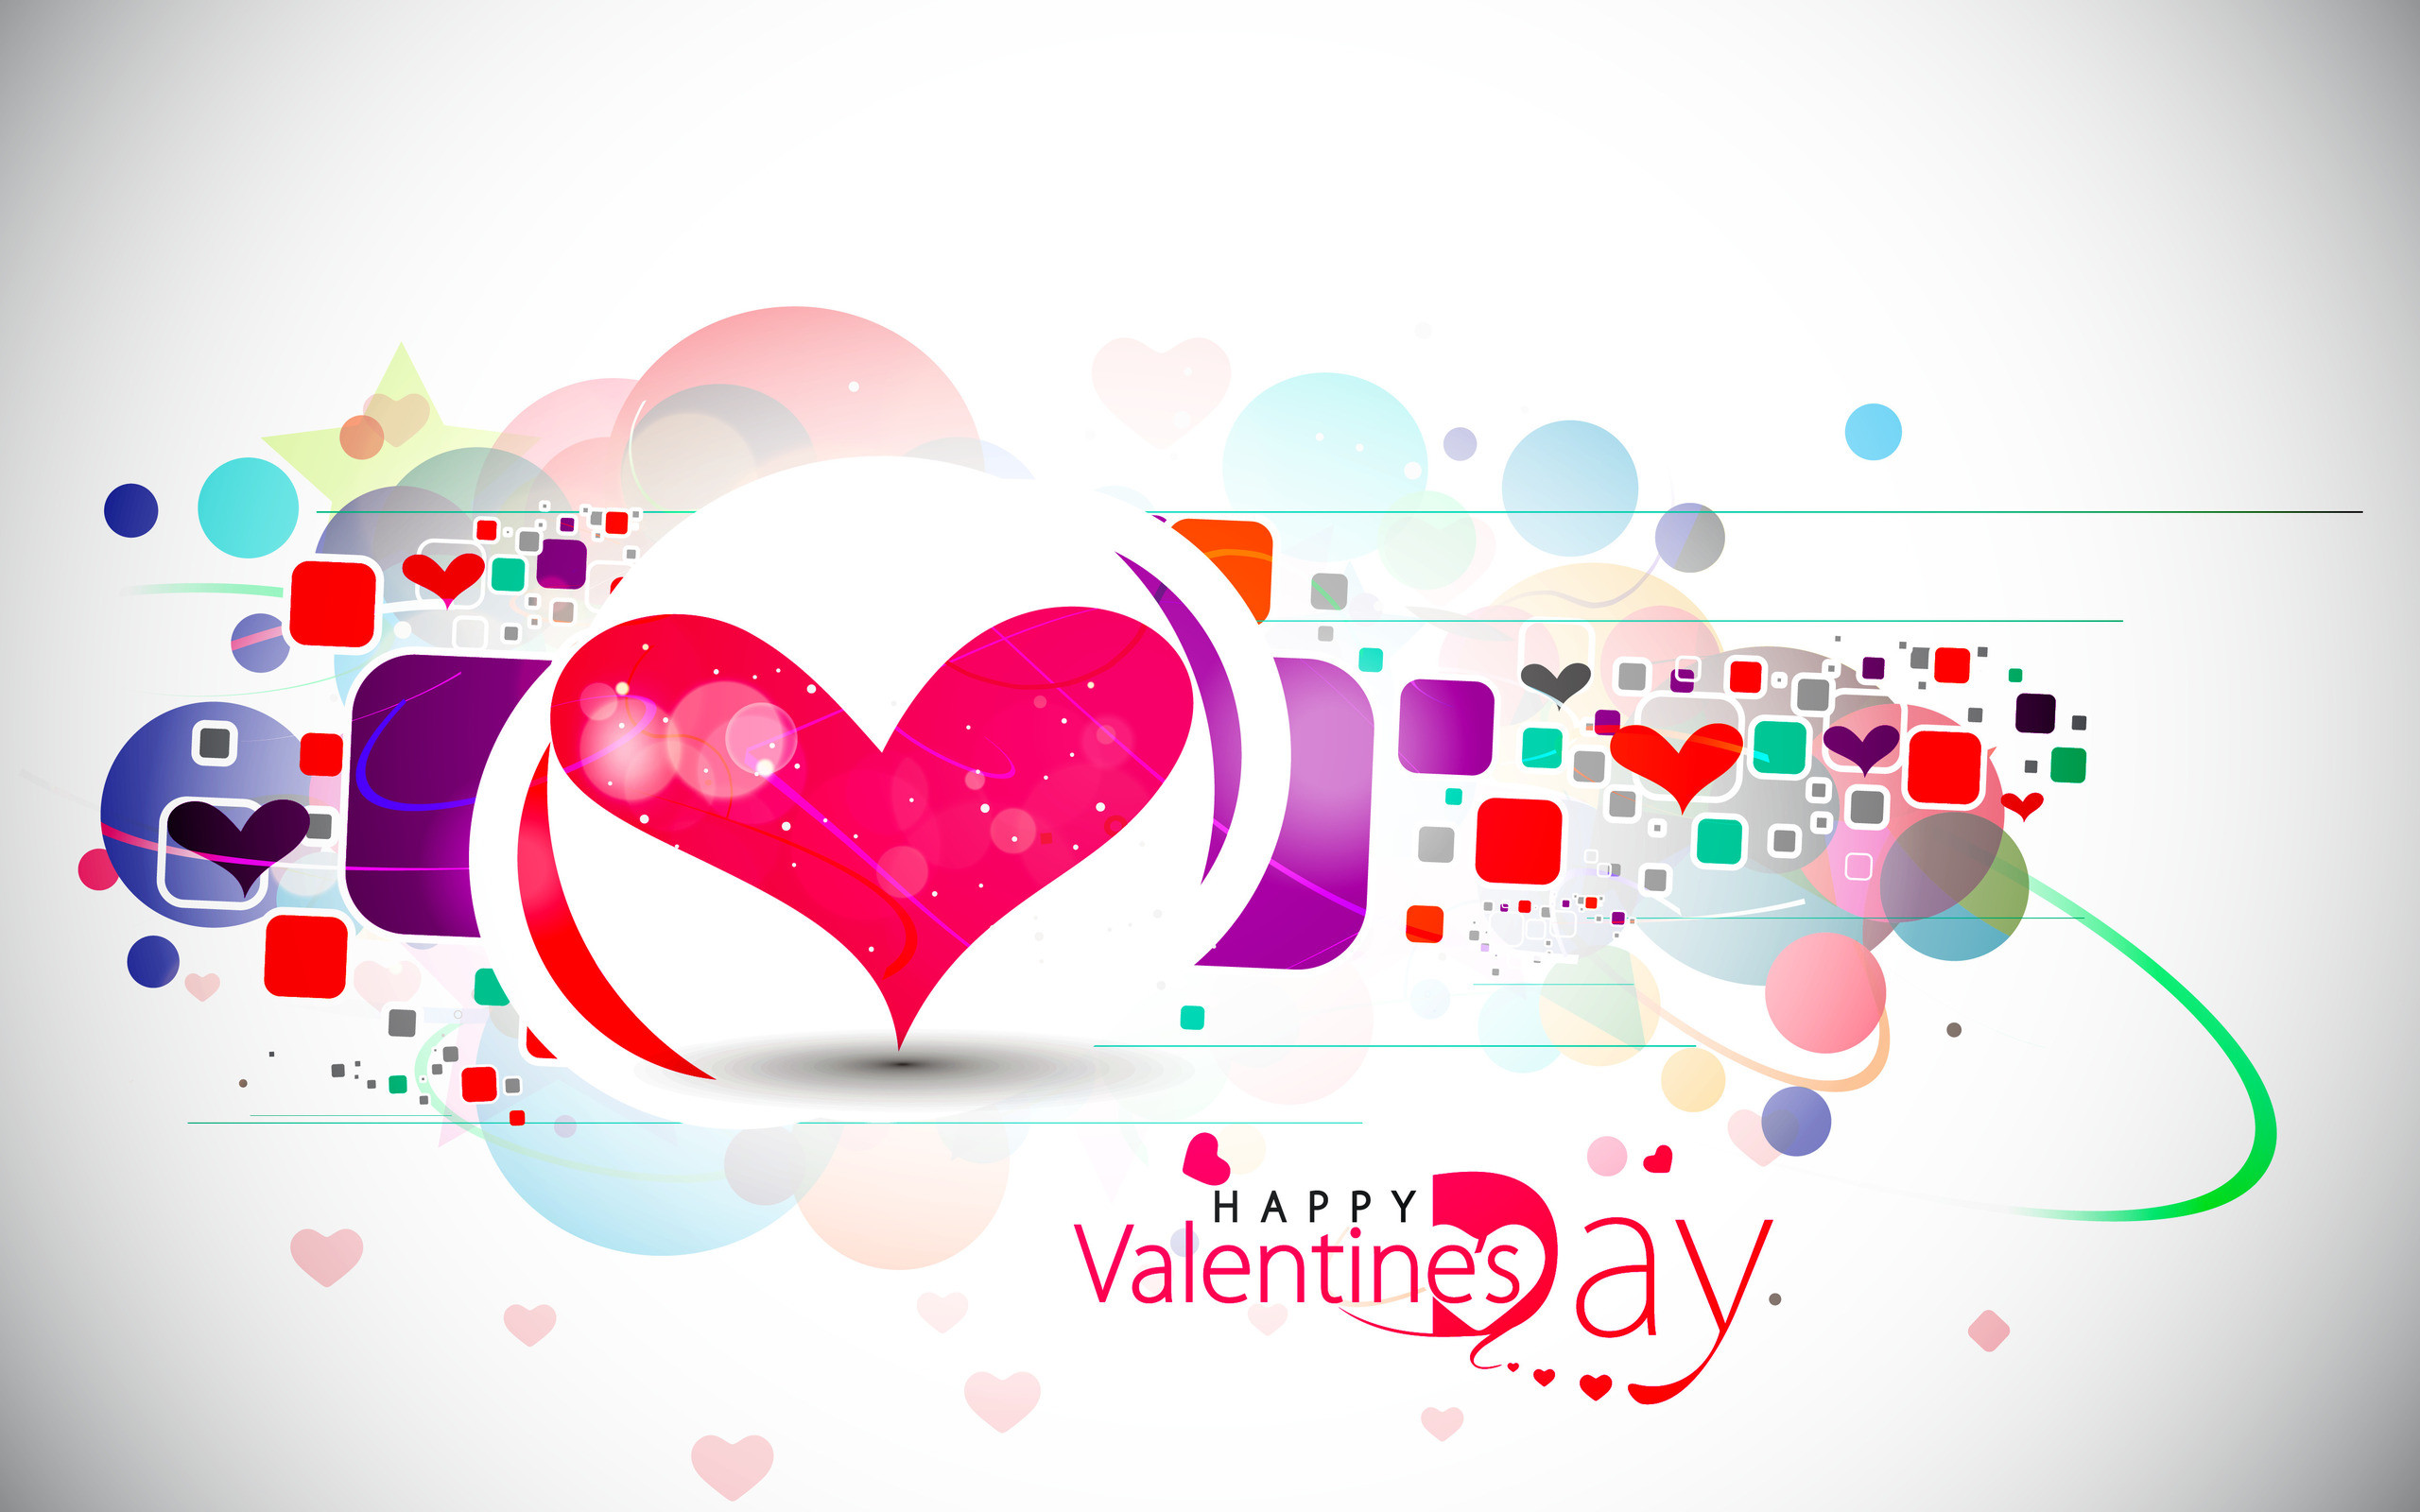 Explore Romantic Valentines Day Ideas and more